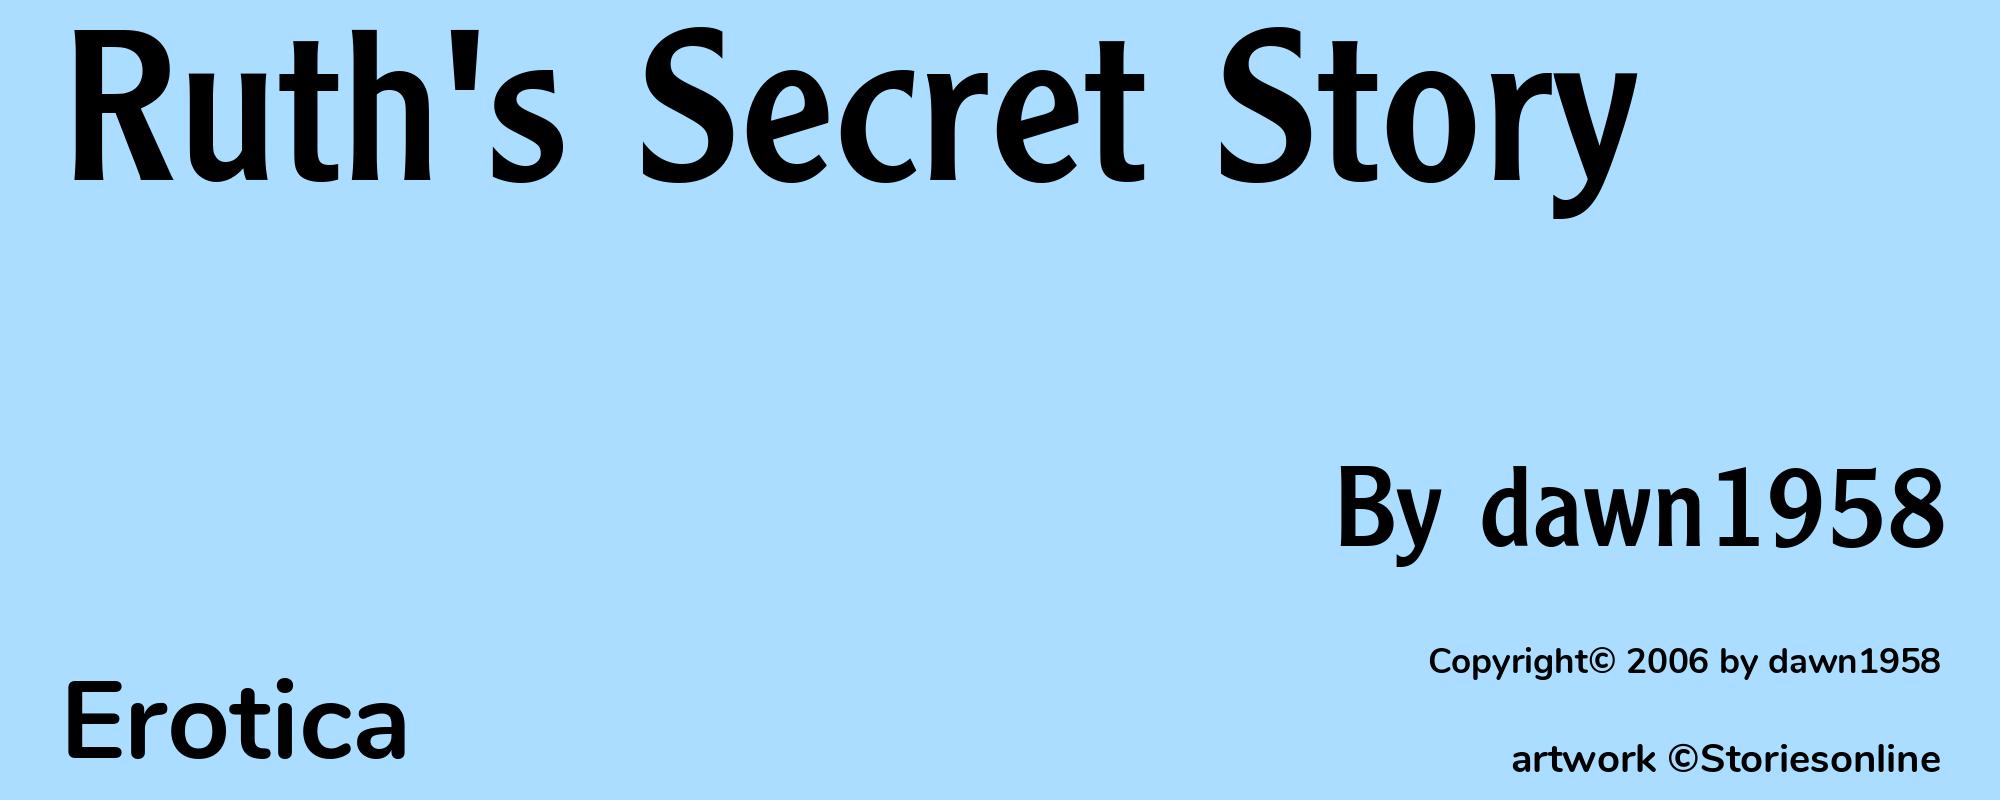 Ruth's Secret Story - Cover